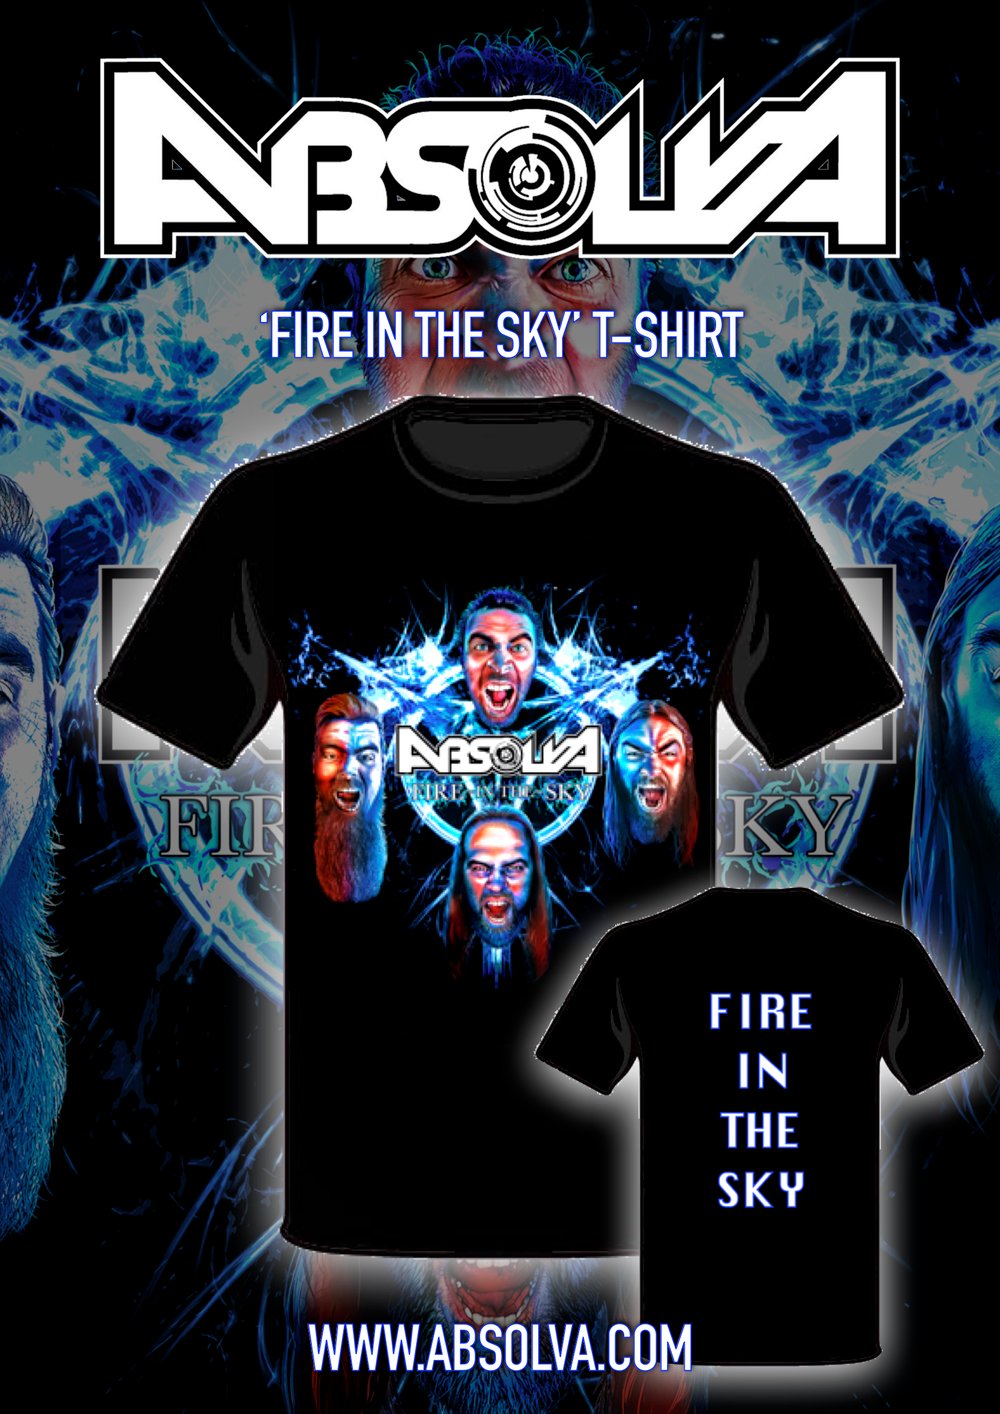 Absolva 'Fire In The Sky' T-shirt